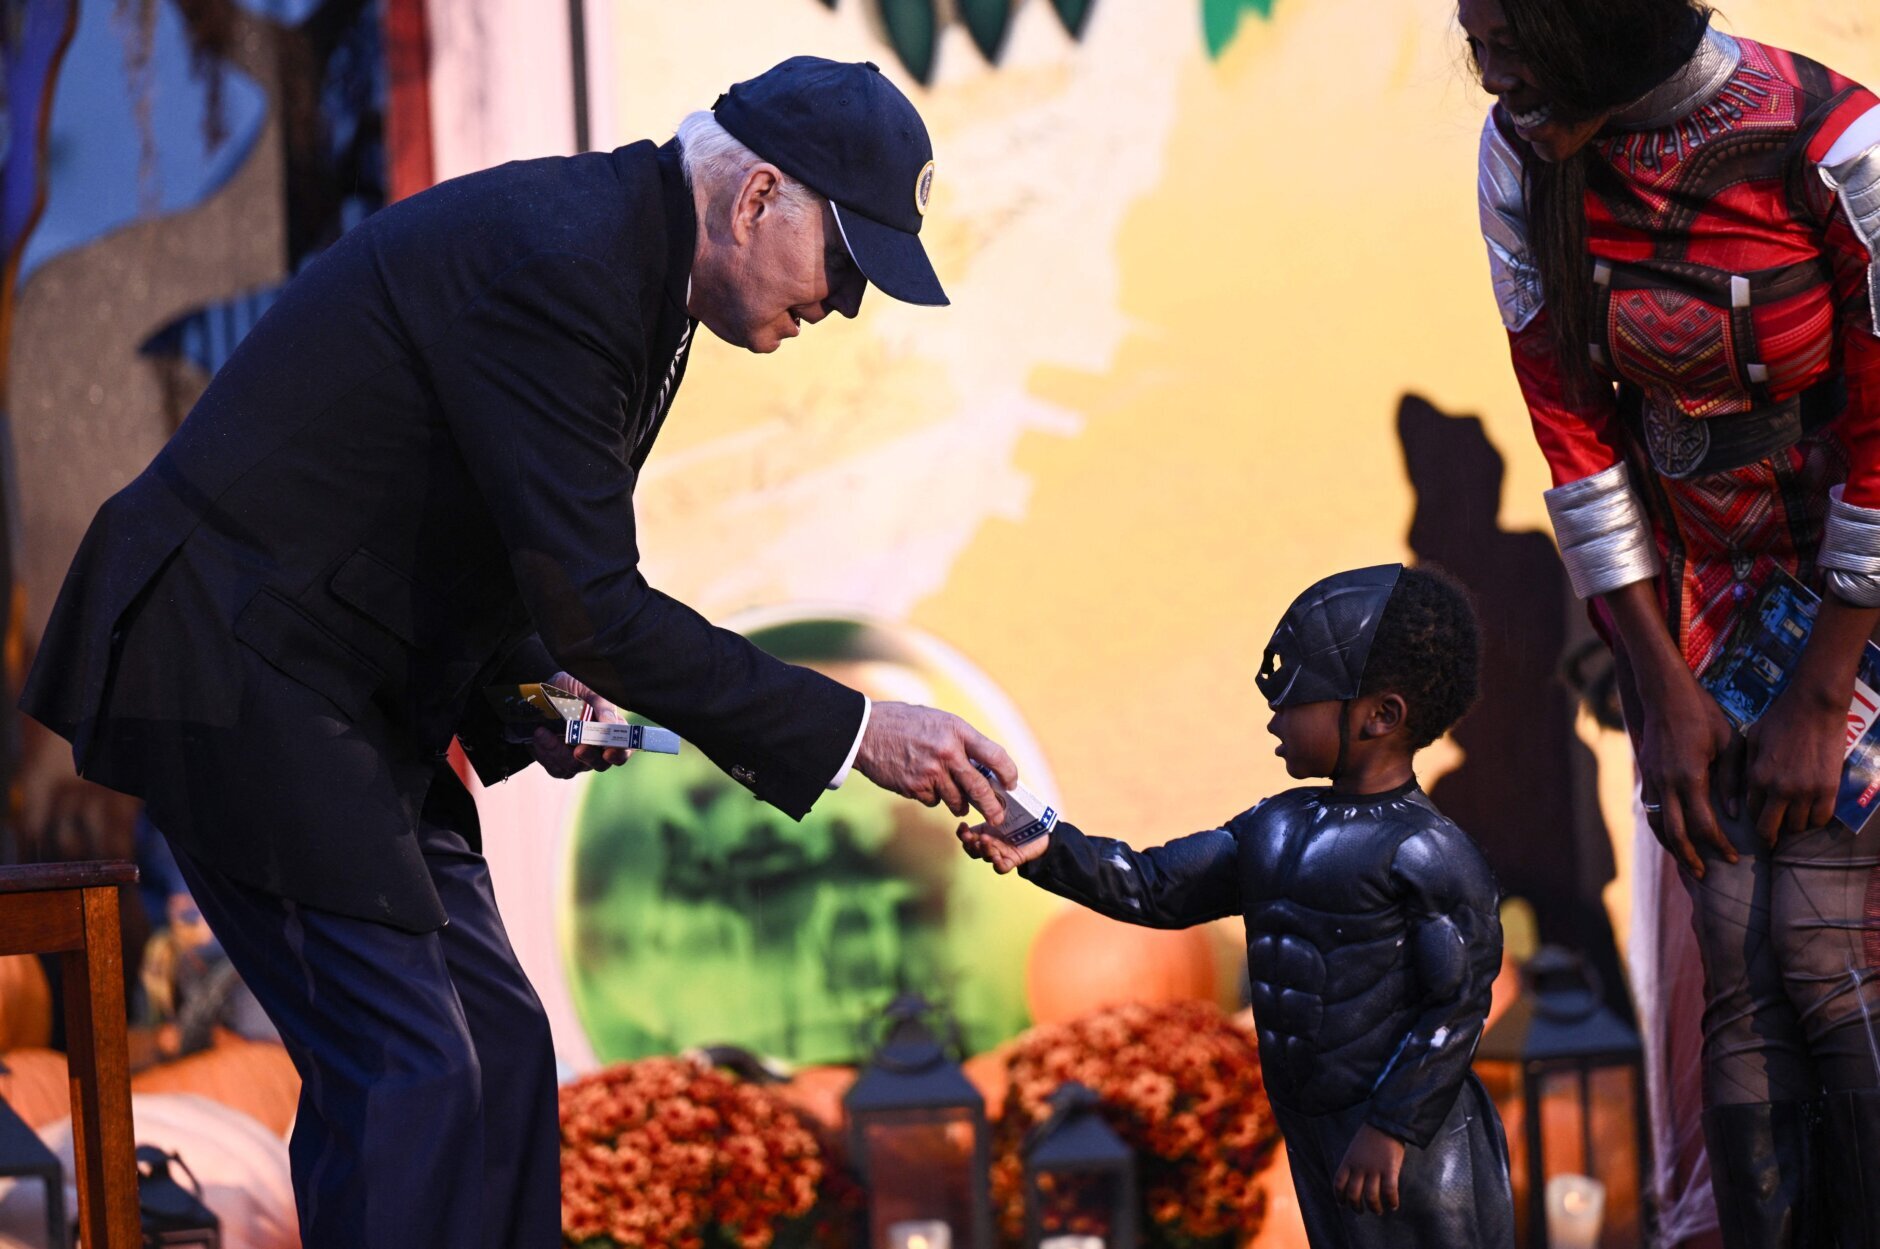 Joe Biden interacts with a boy dressed as a superhero